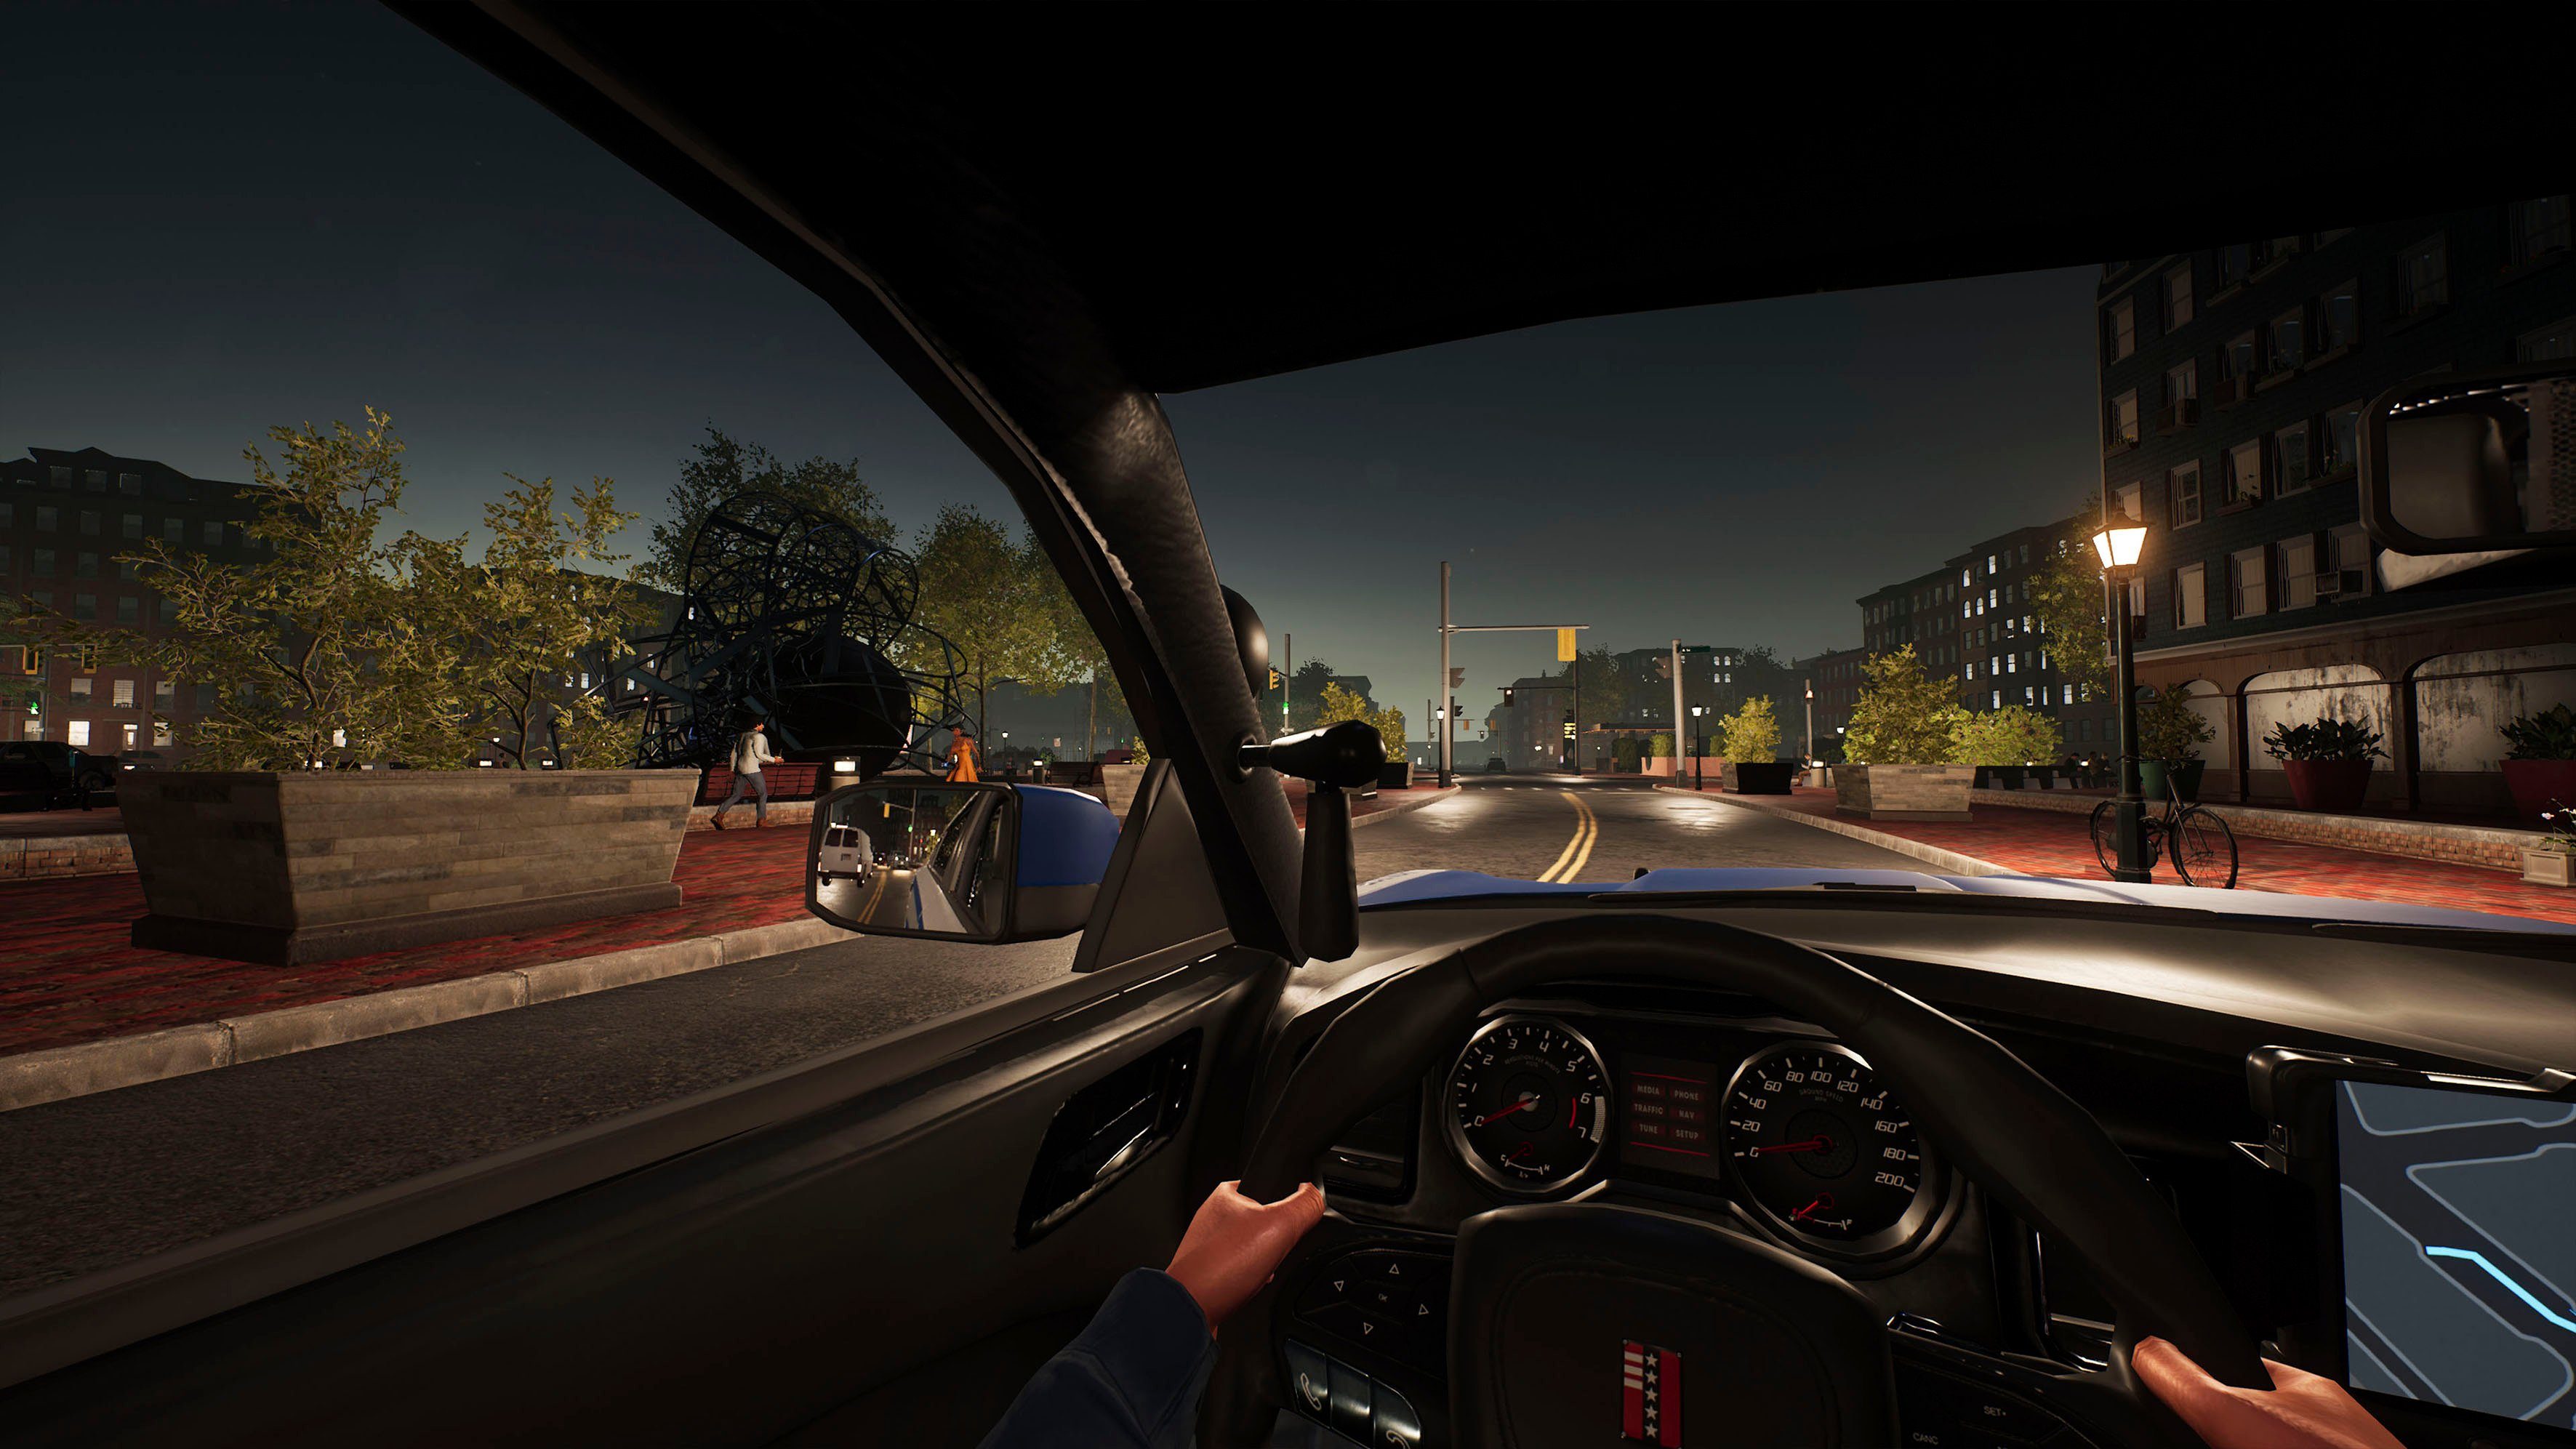 Astragon Officers 5 Police Simulator: Patrol PlayStation